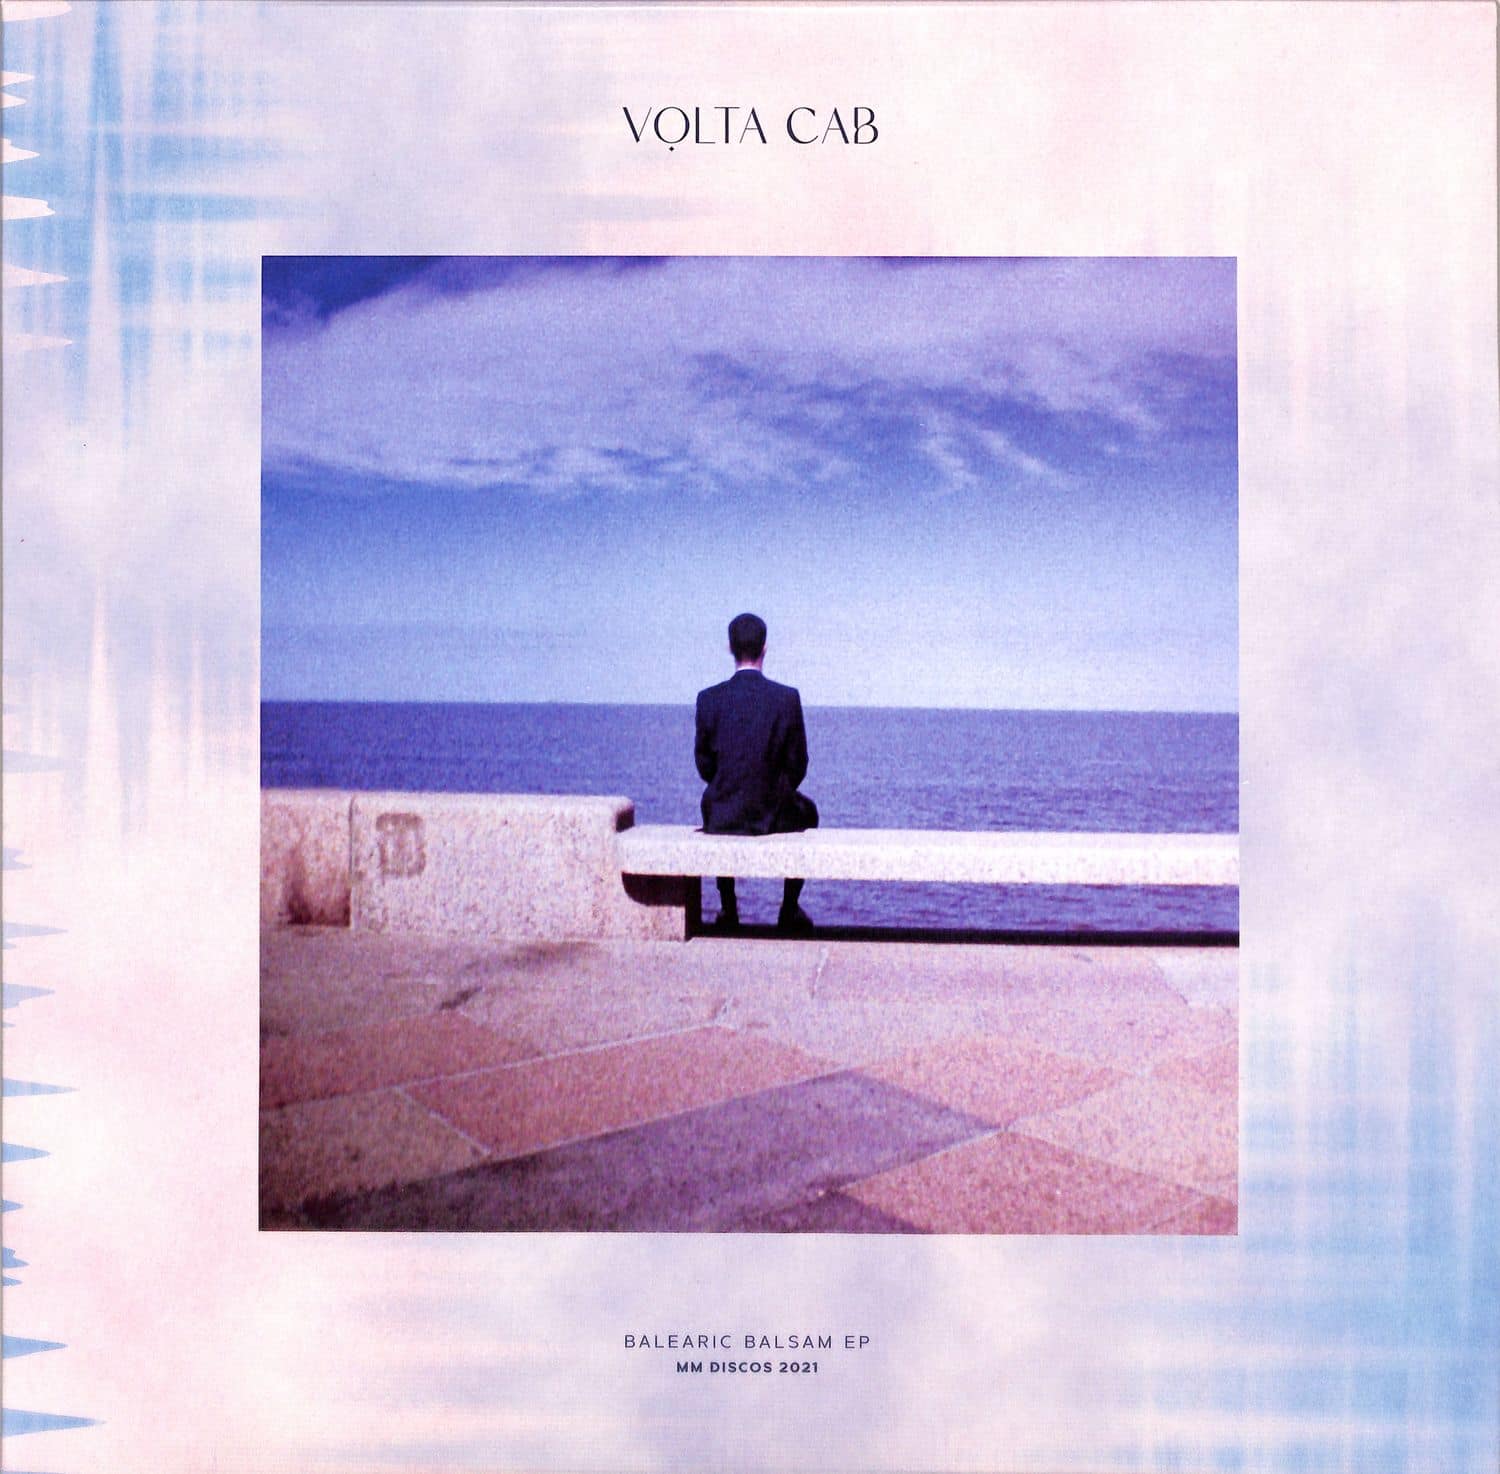 Volta Cab - BALEARIC BALSAM EP 